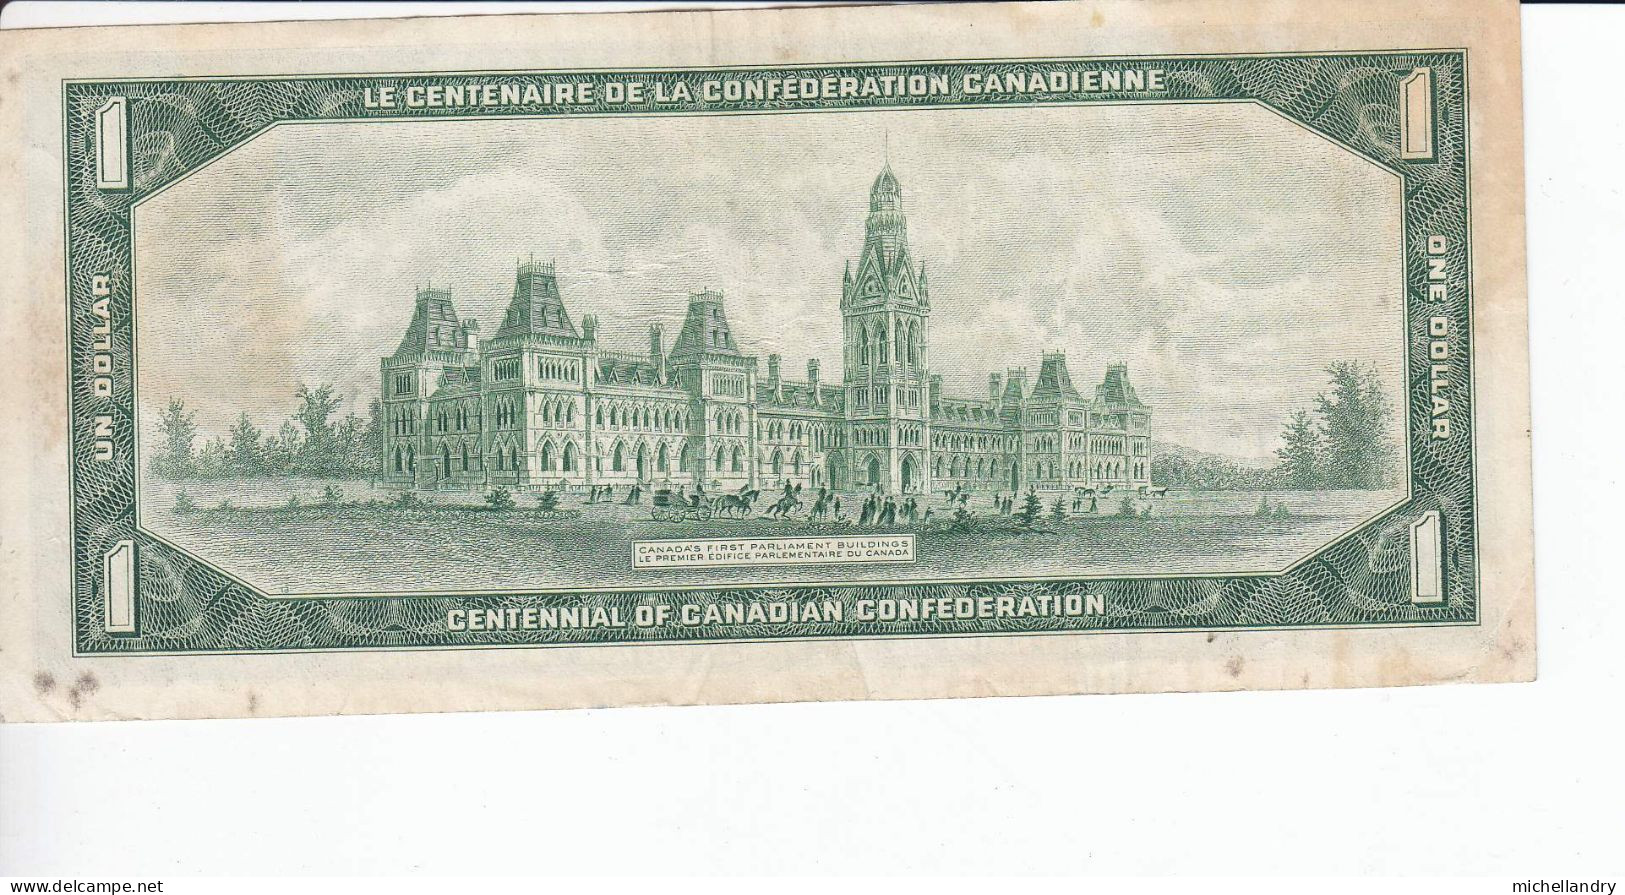 Monnaie (123254) Banque Du Canada 1954 Un Dollar Centenial Confederation Série JP0014531 Beattie/Raminsky - Canada